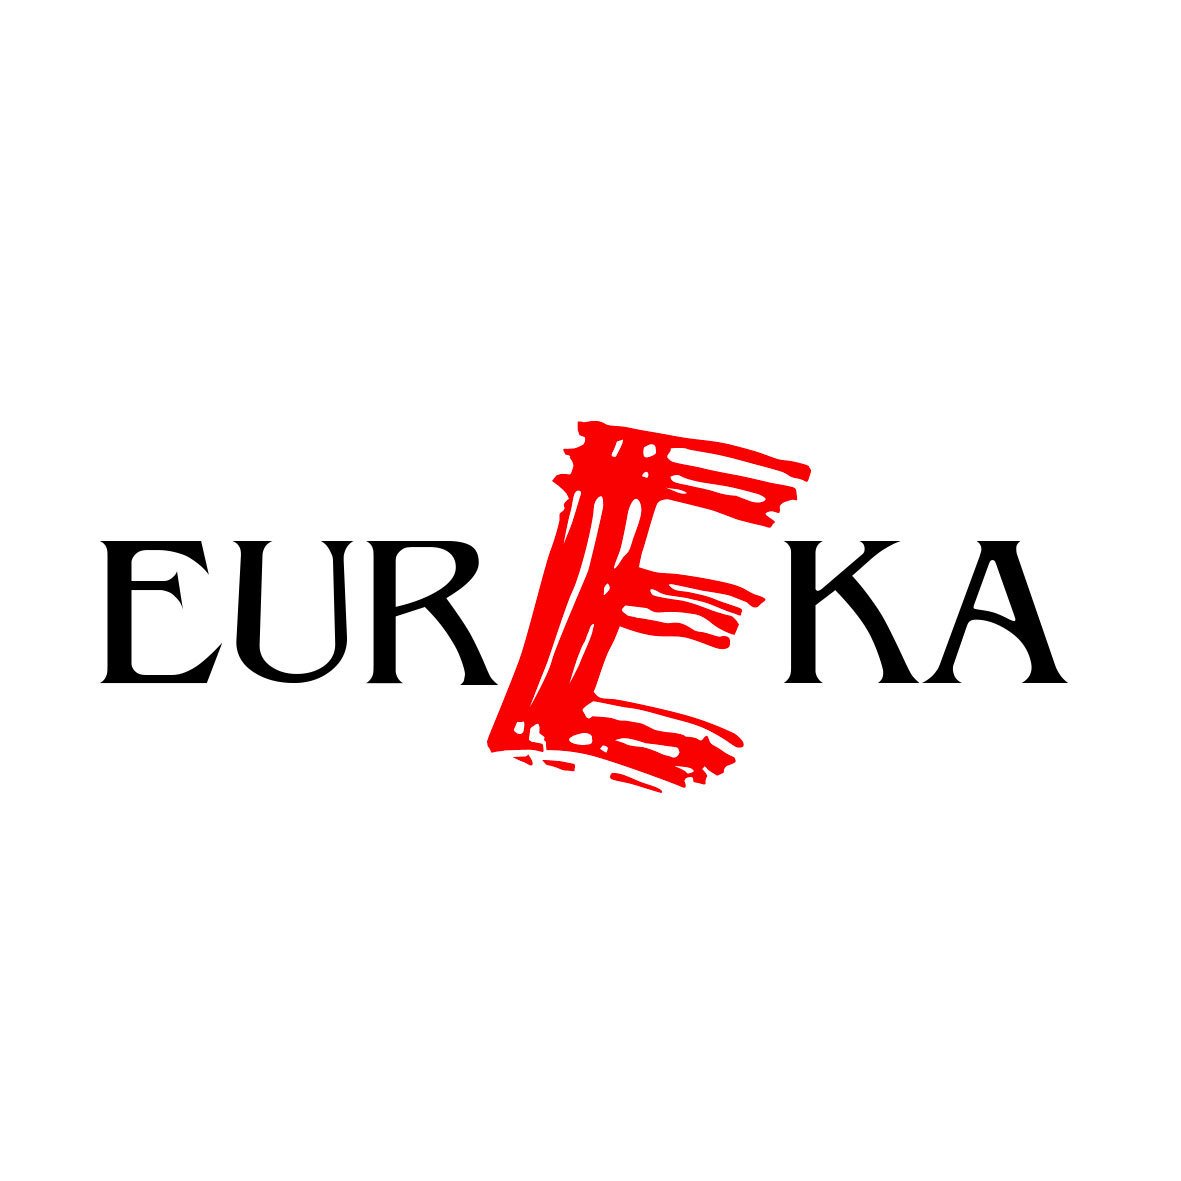 eurEka - 1998